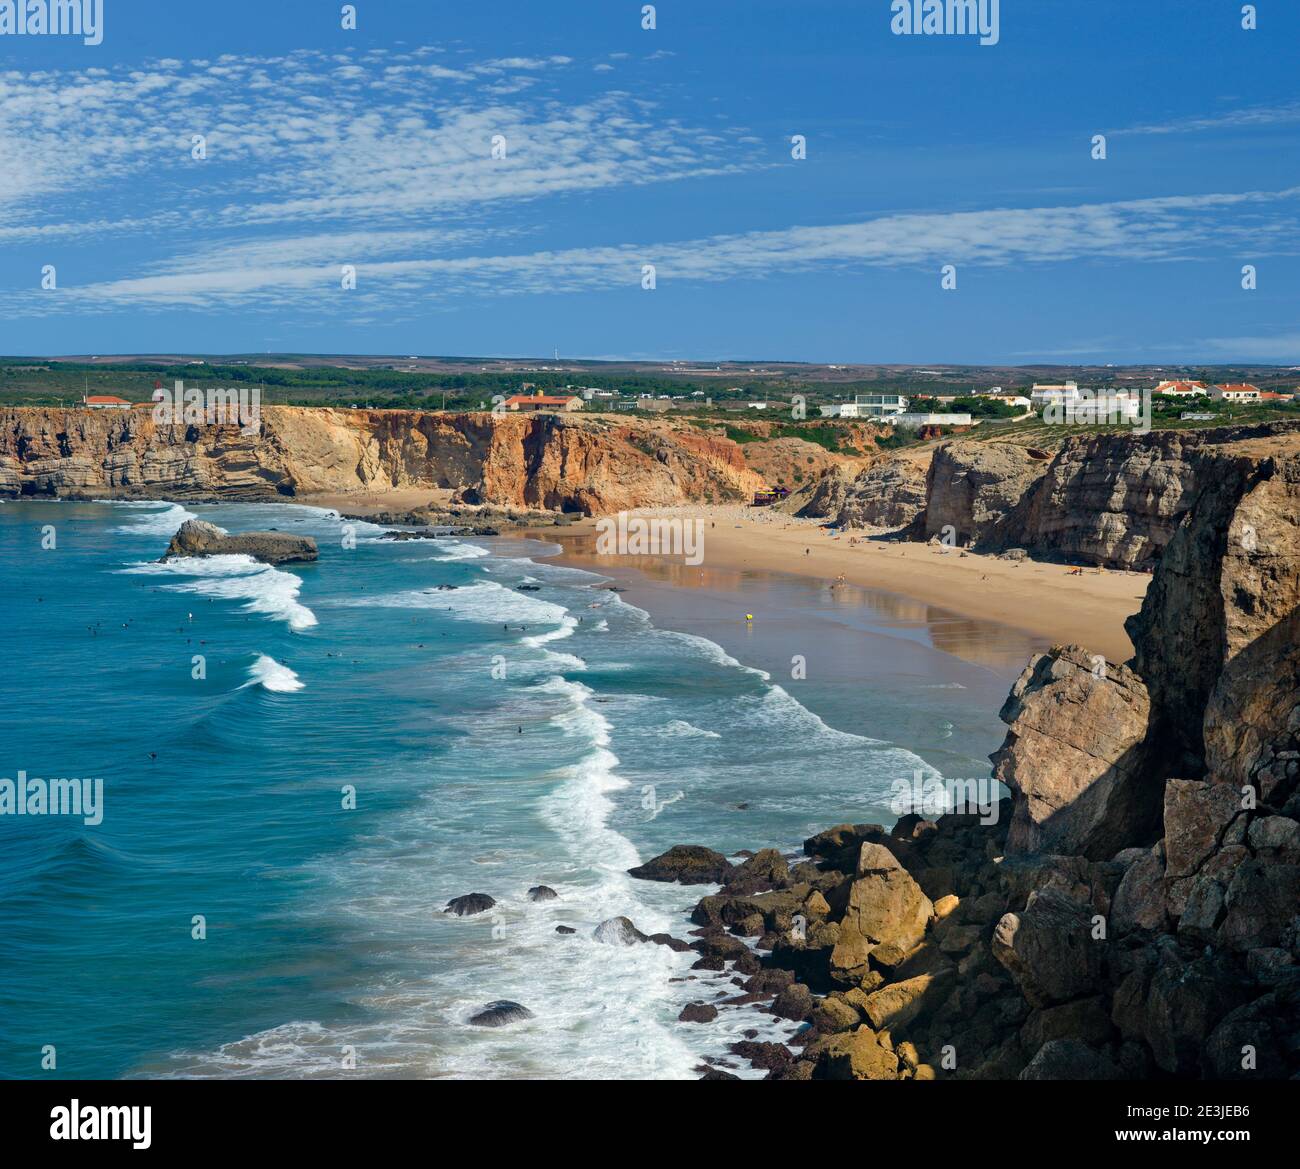 Portugal, the Algarve, Sagres, Praia do Tonel beach Stock Photo